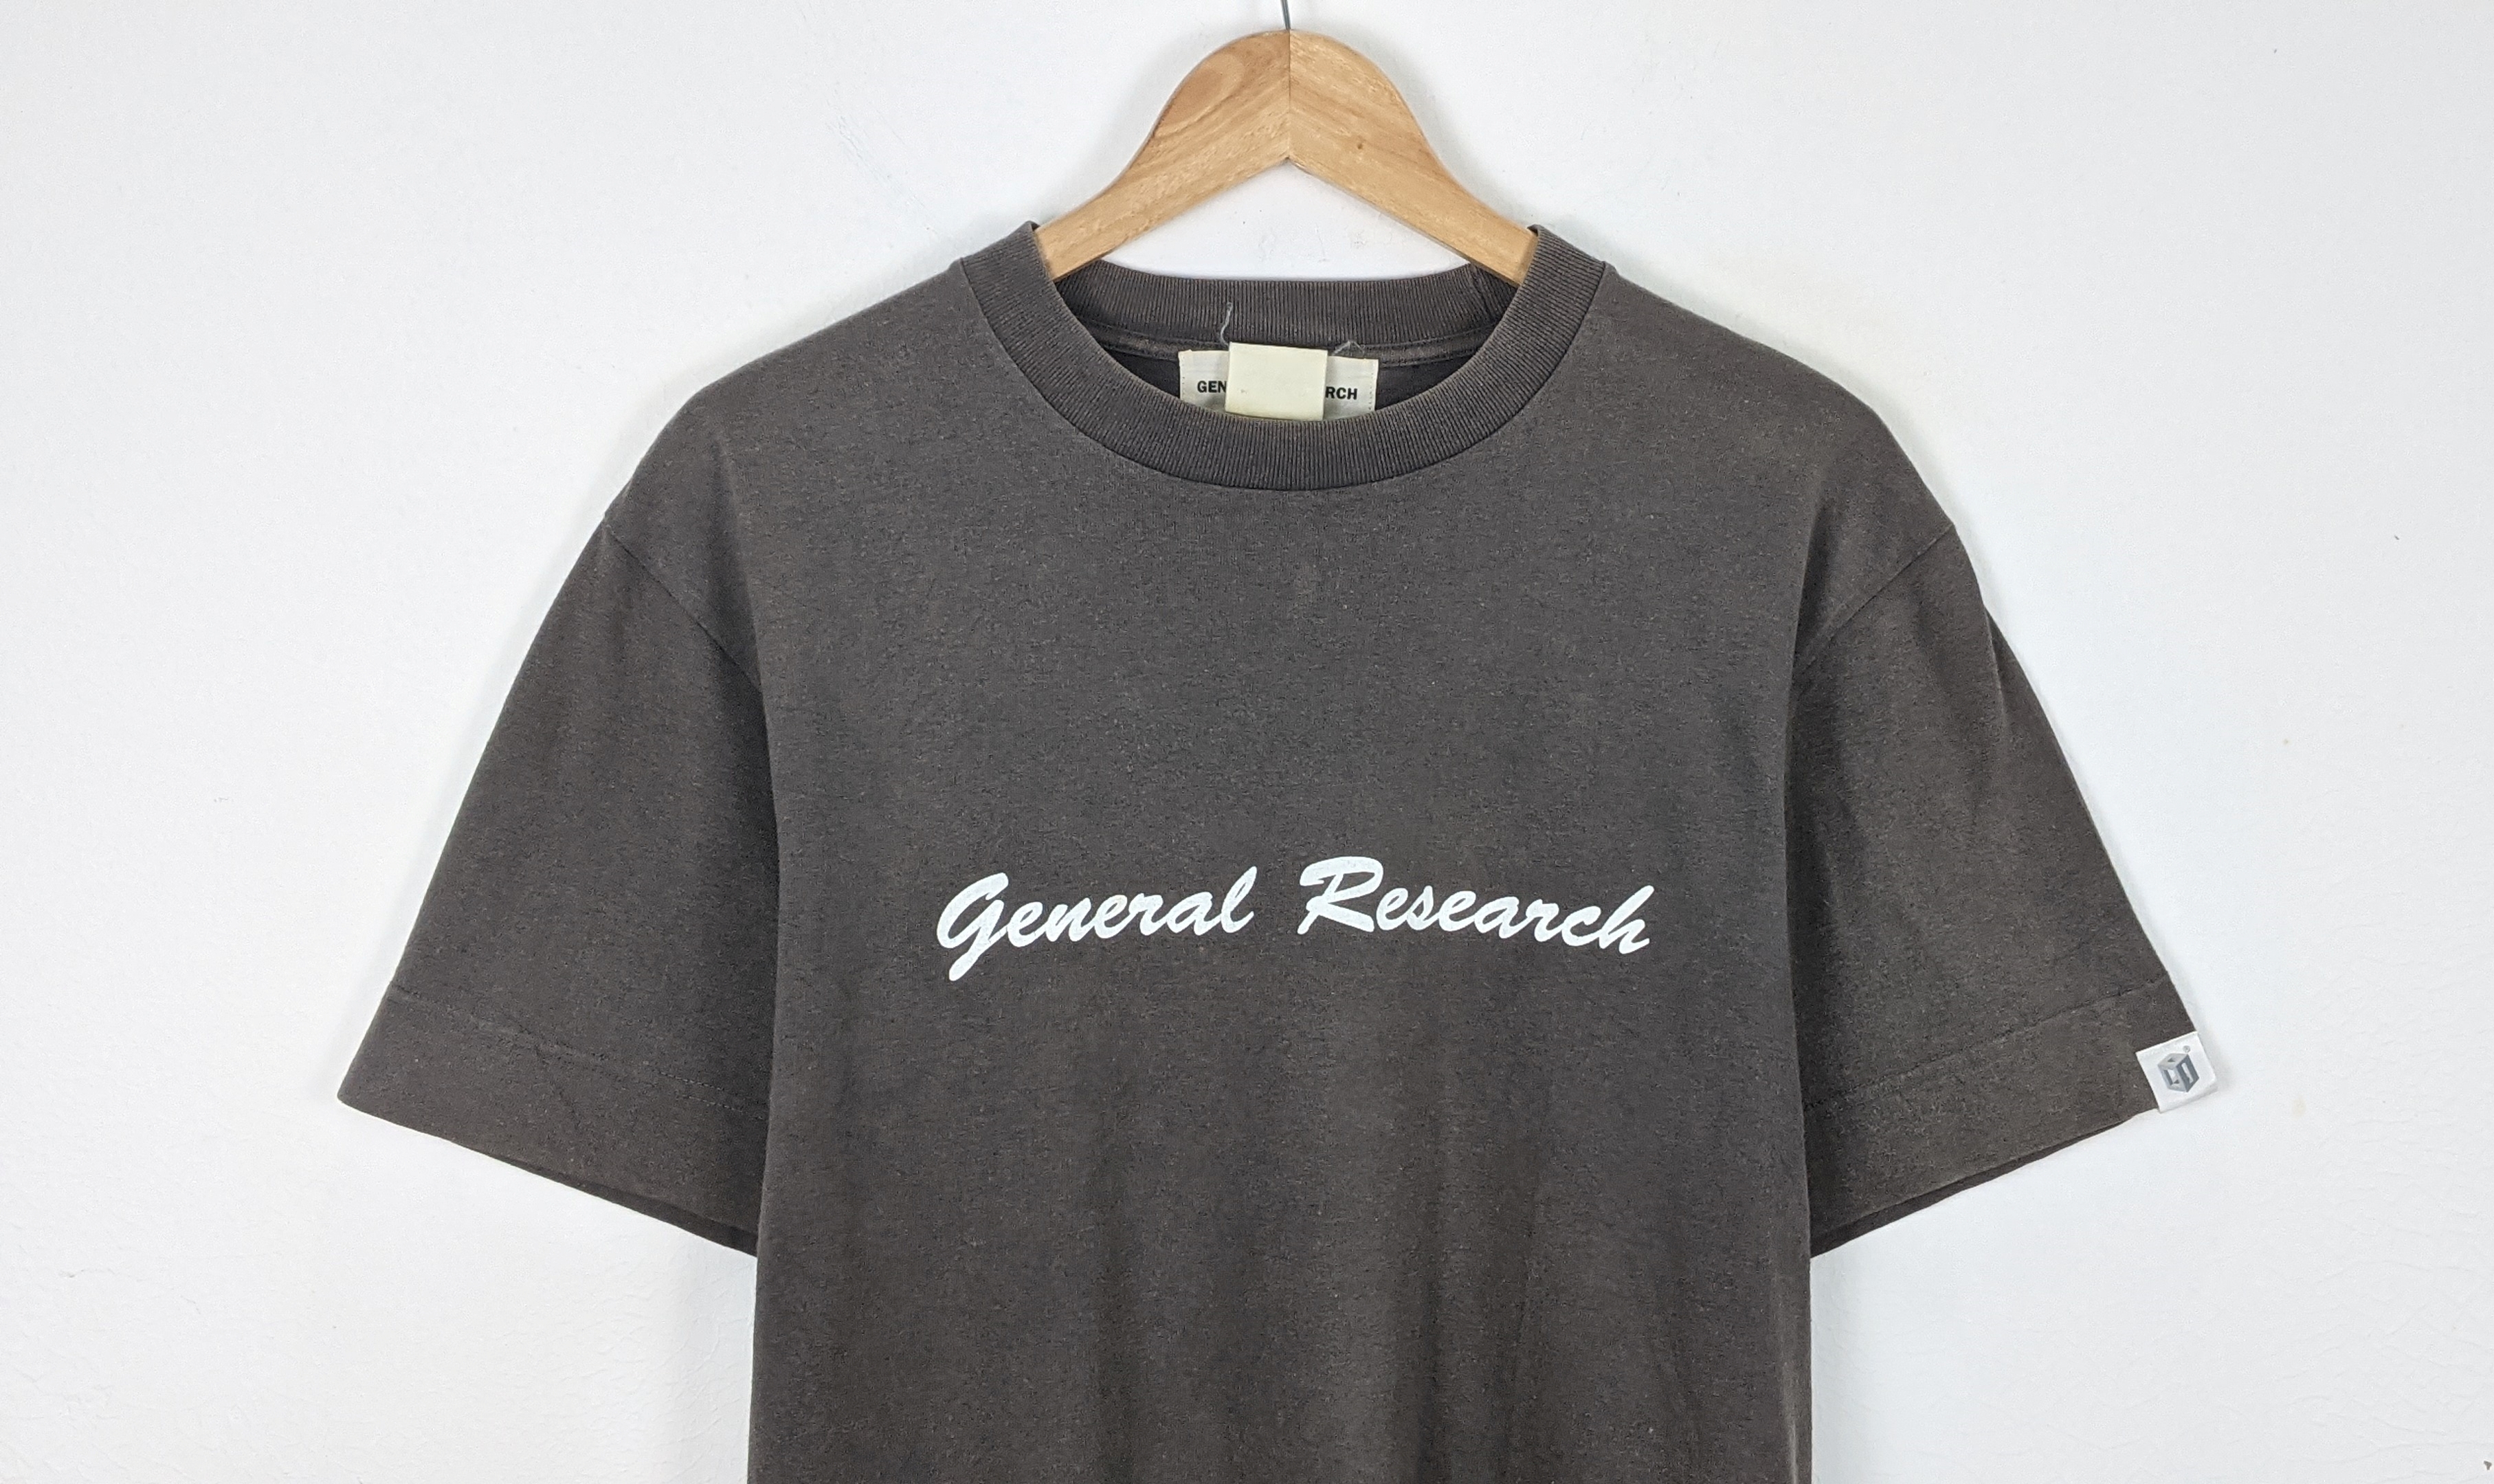 General Research 2001 shirt - 2